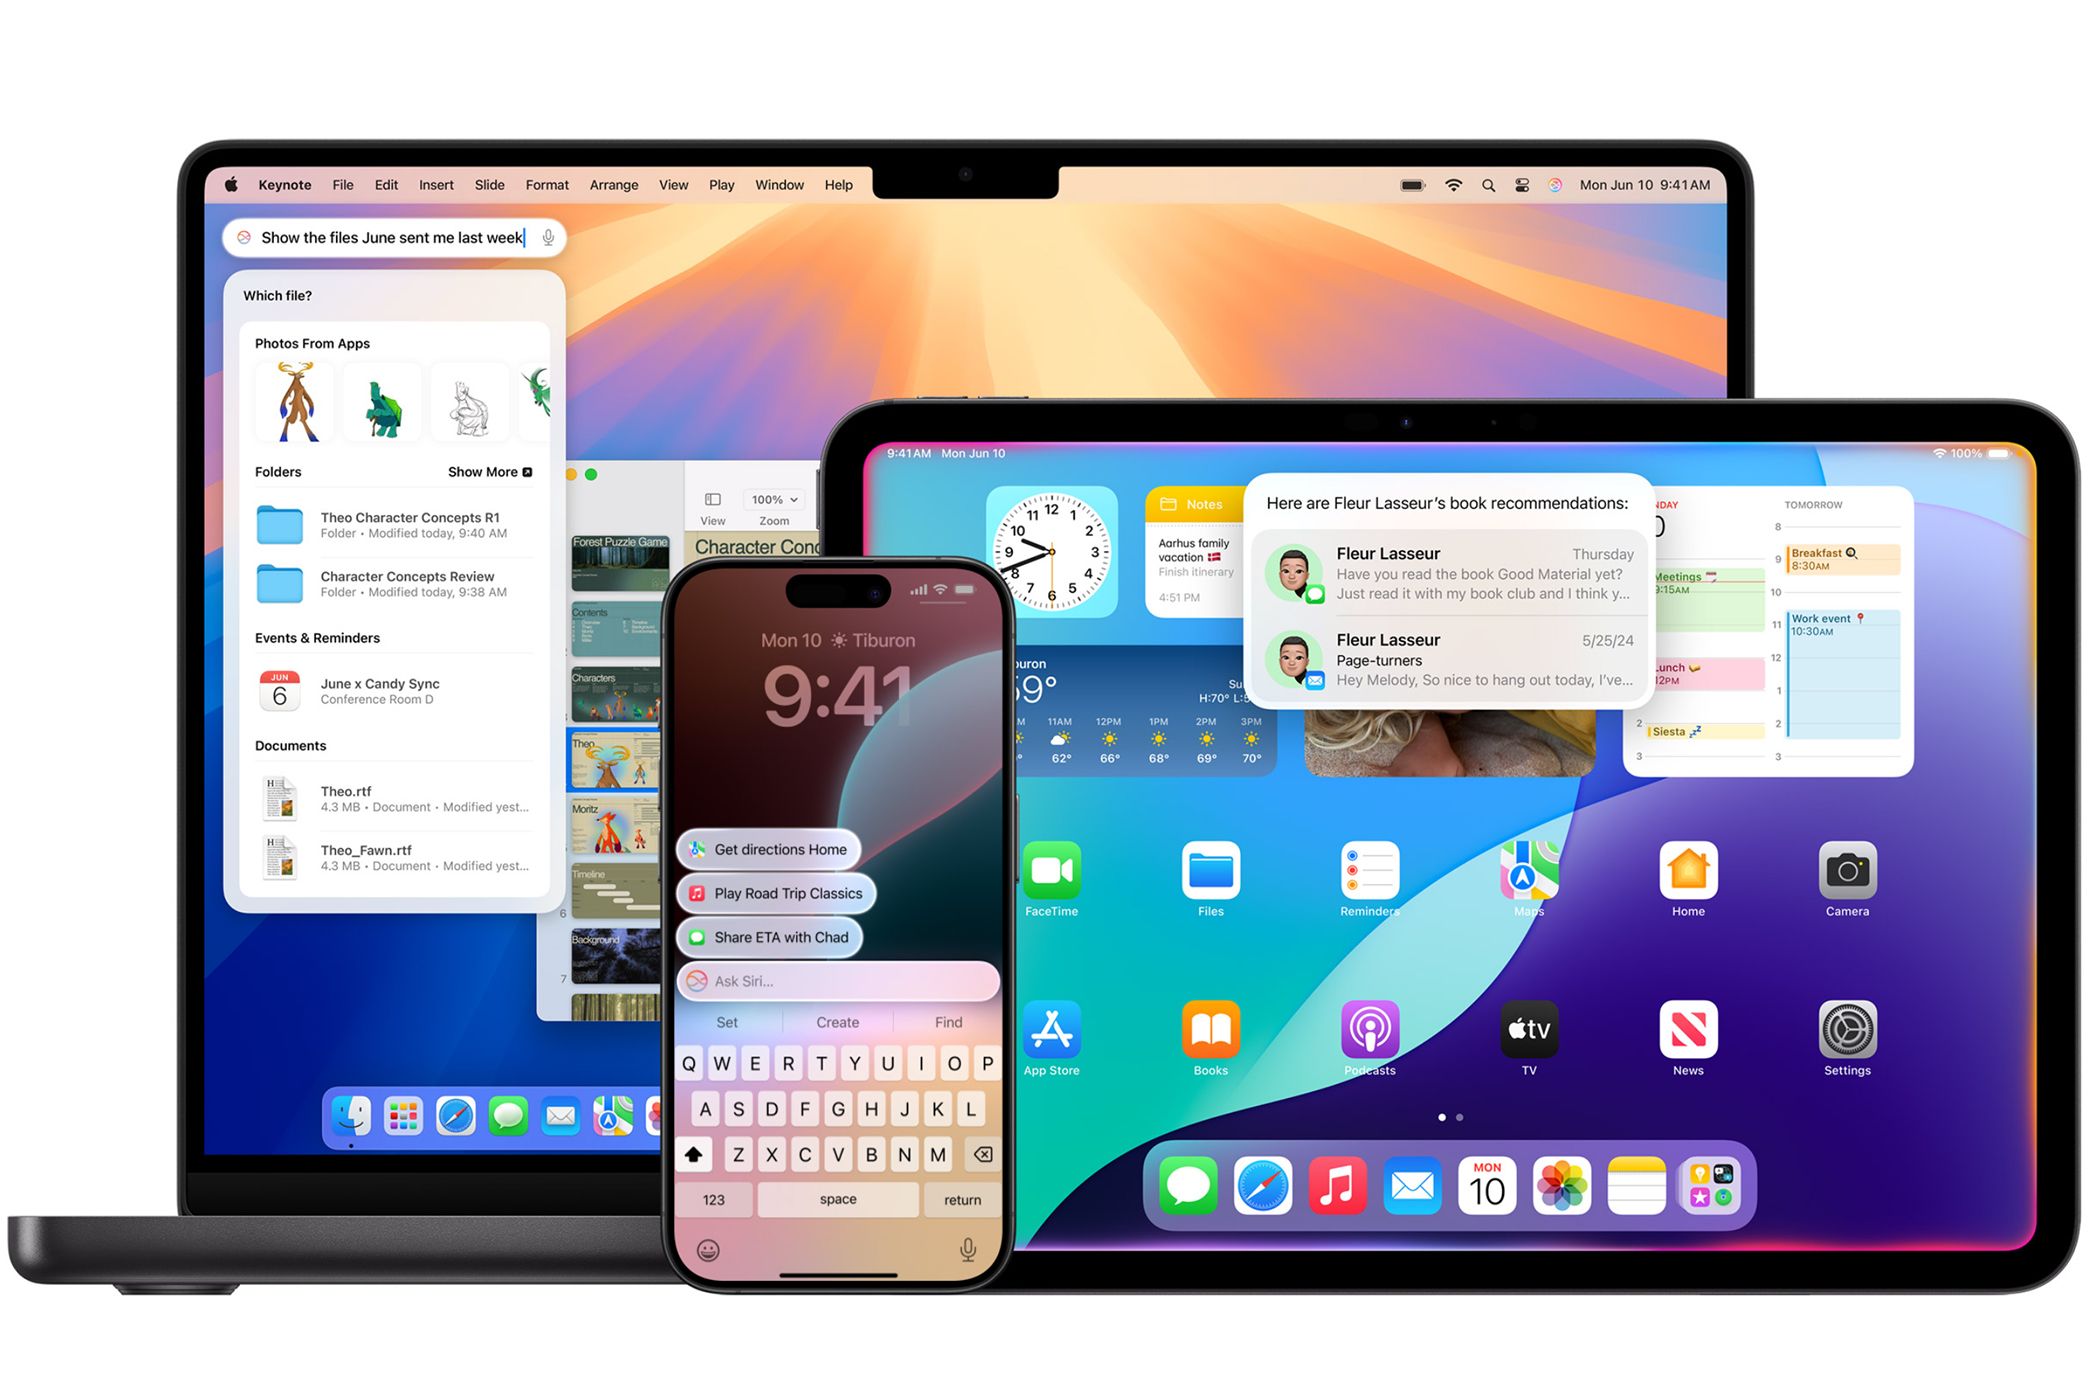 iOS 18, iPadOS 18, and macOS Sequoia running on iPhone, iPad, and Mac